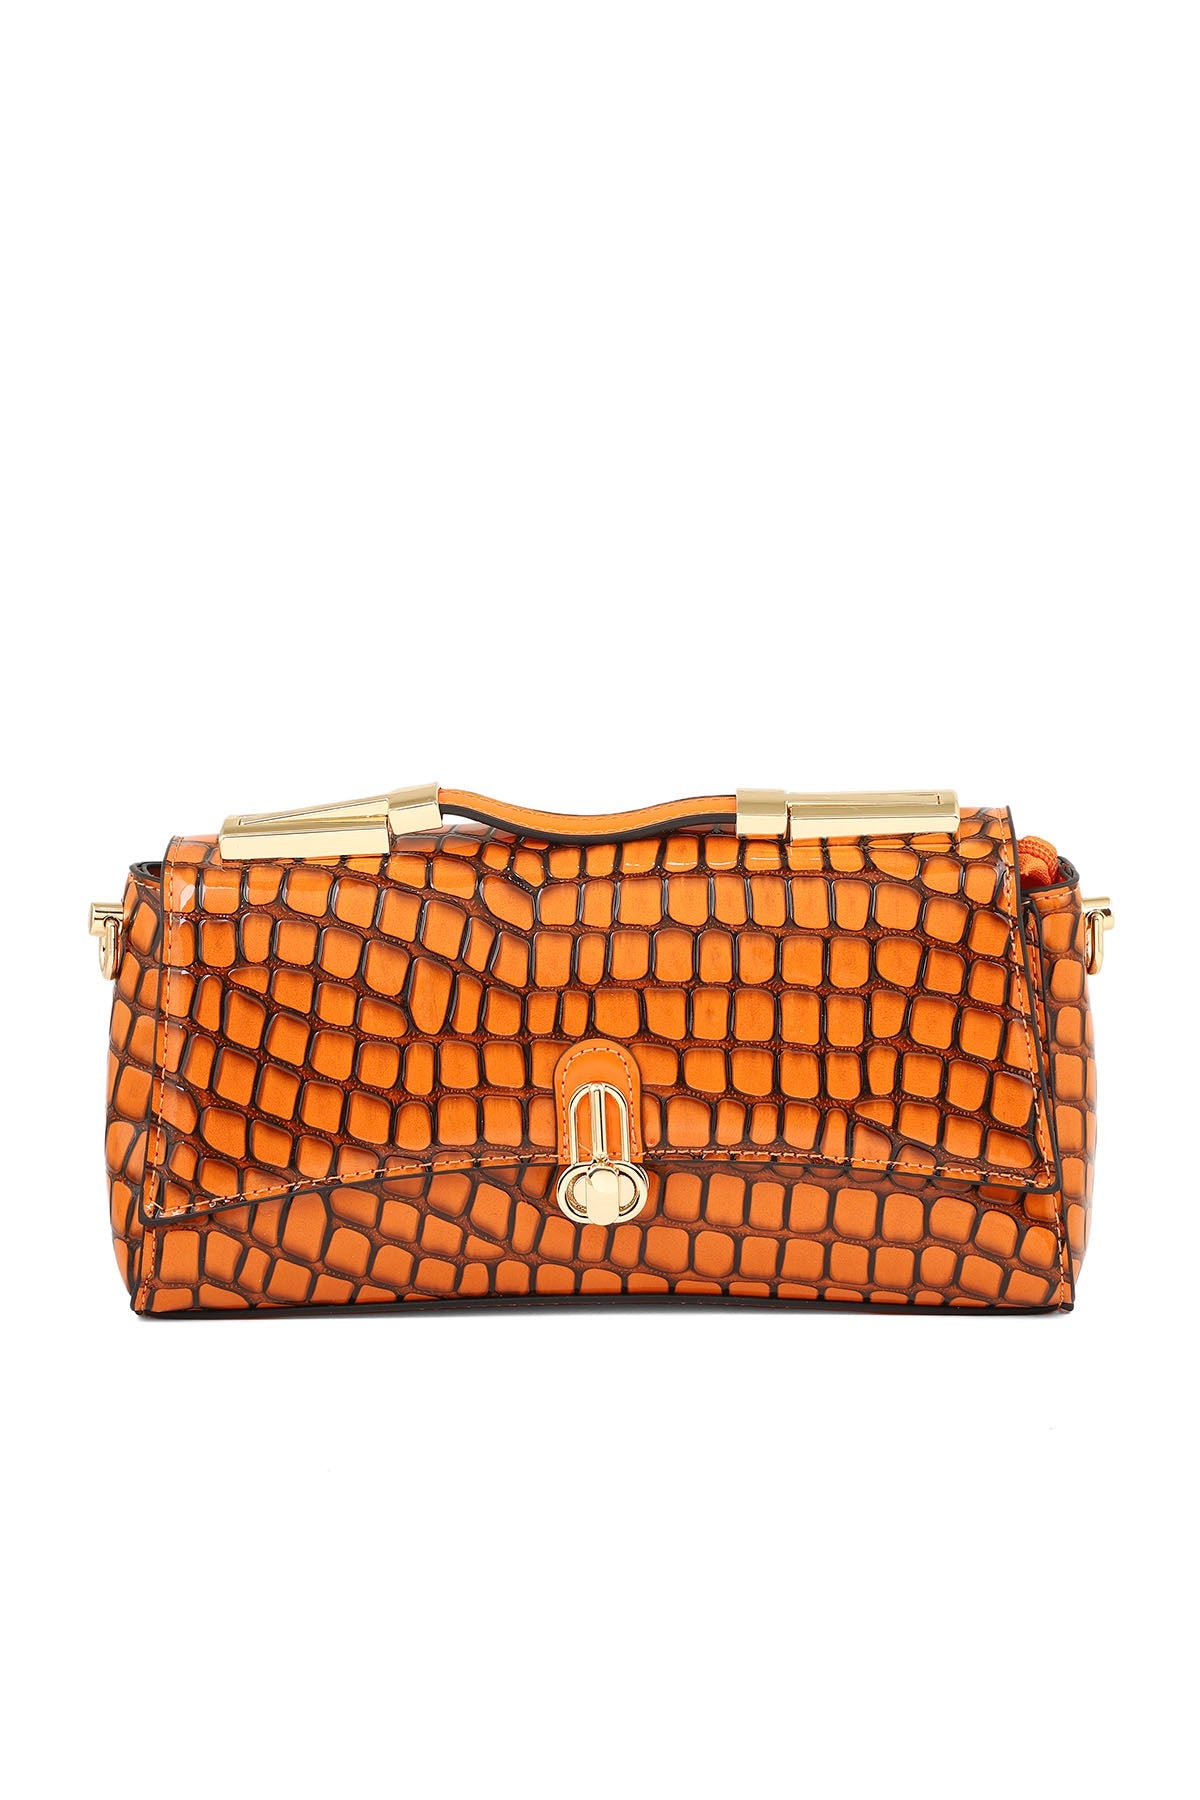 Top Handle Hand Bags B15078-Orange